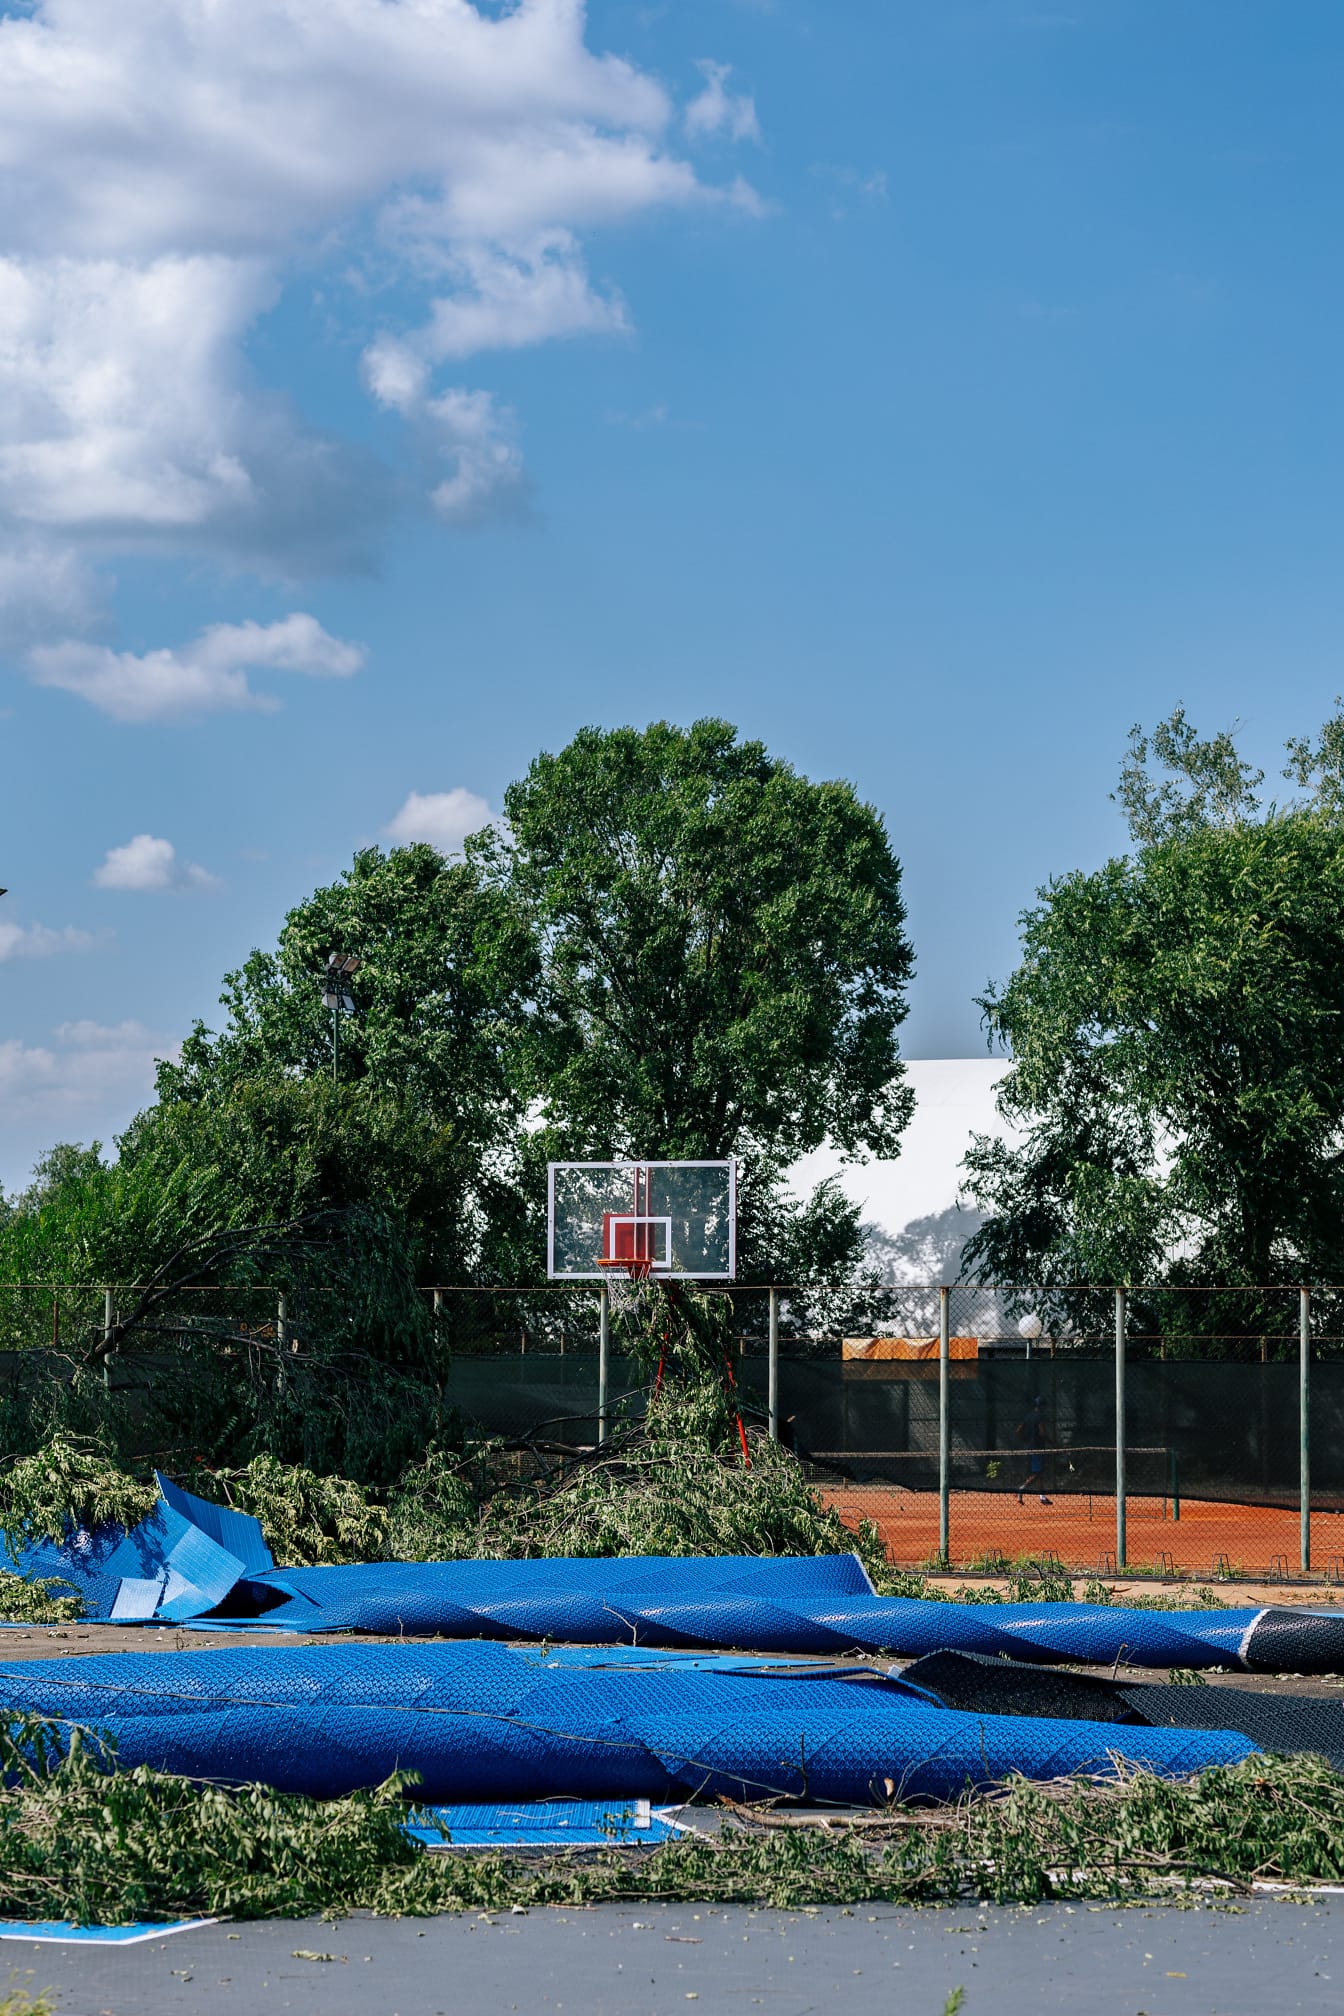 Hurricane wind damage destroyed basketball court